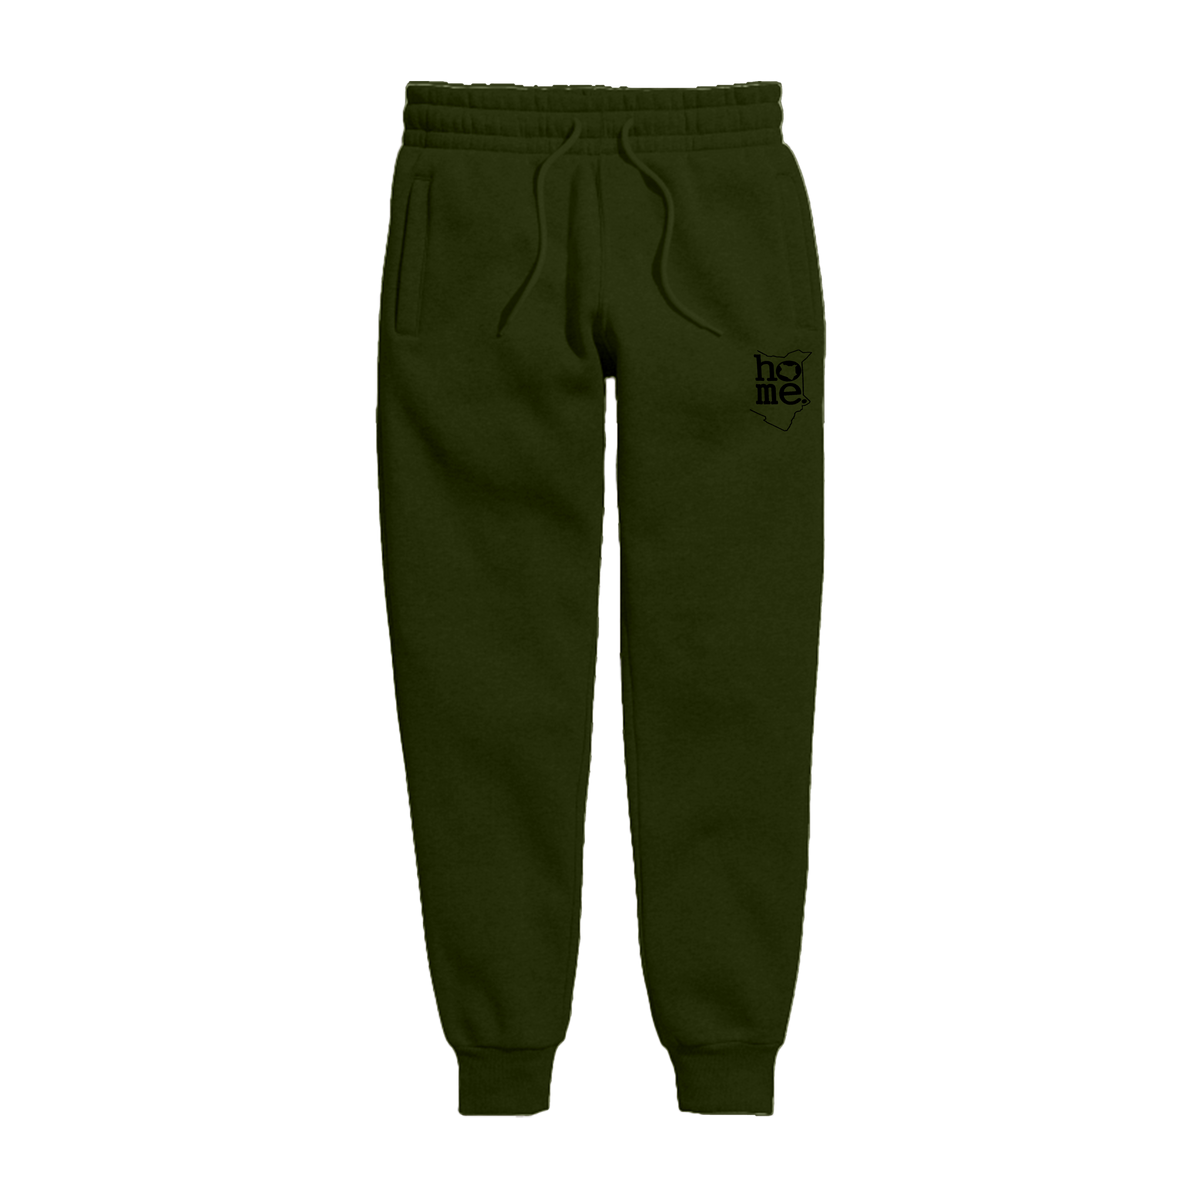 Mens Sweatpants - Jungle Green (Heavy Fabric)